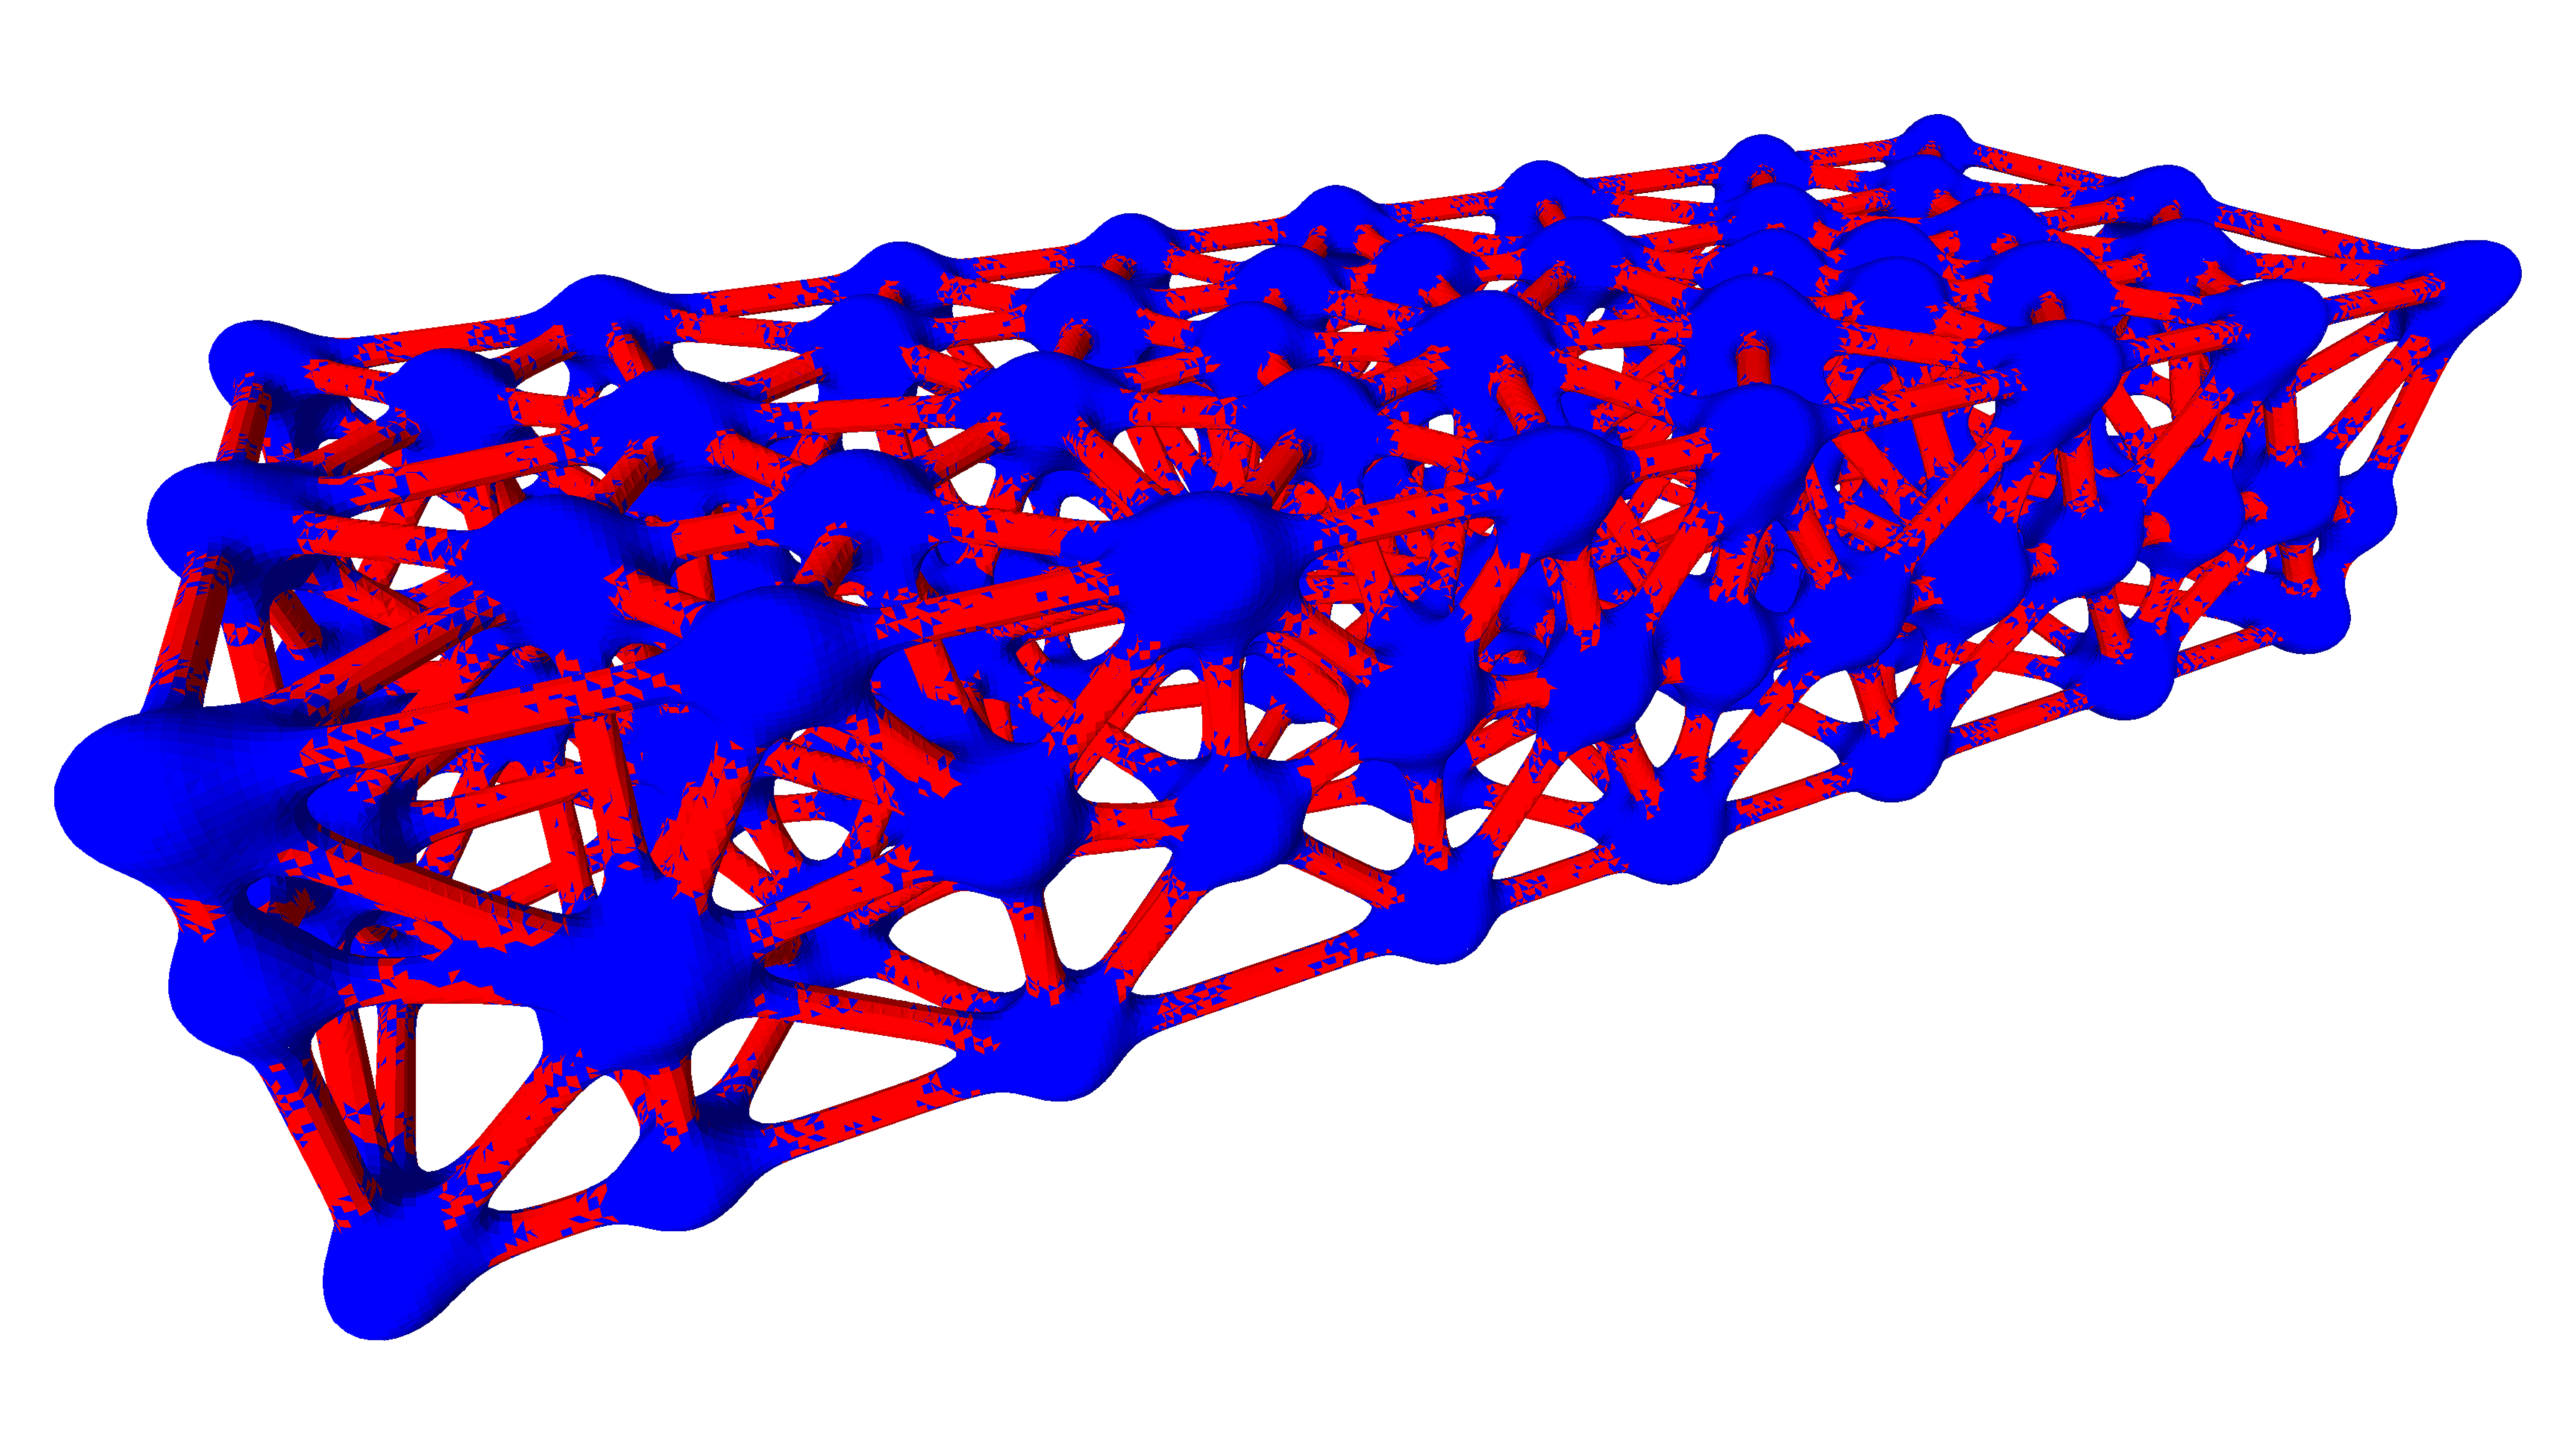 Multi-material functionally graded lattice structure